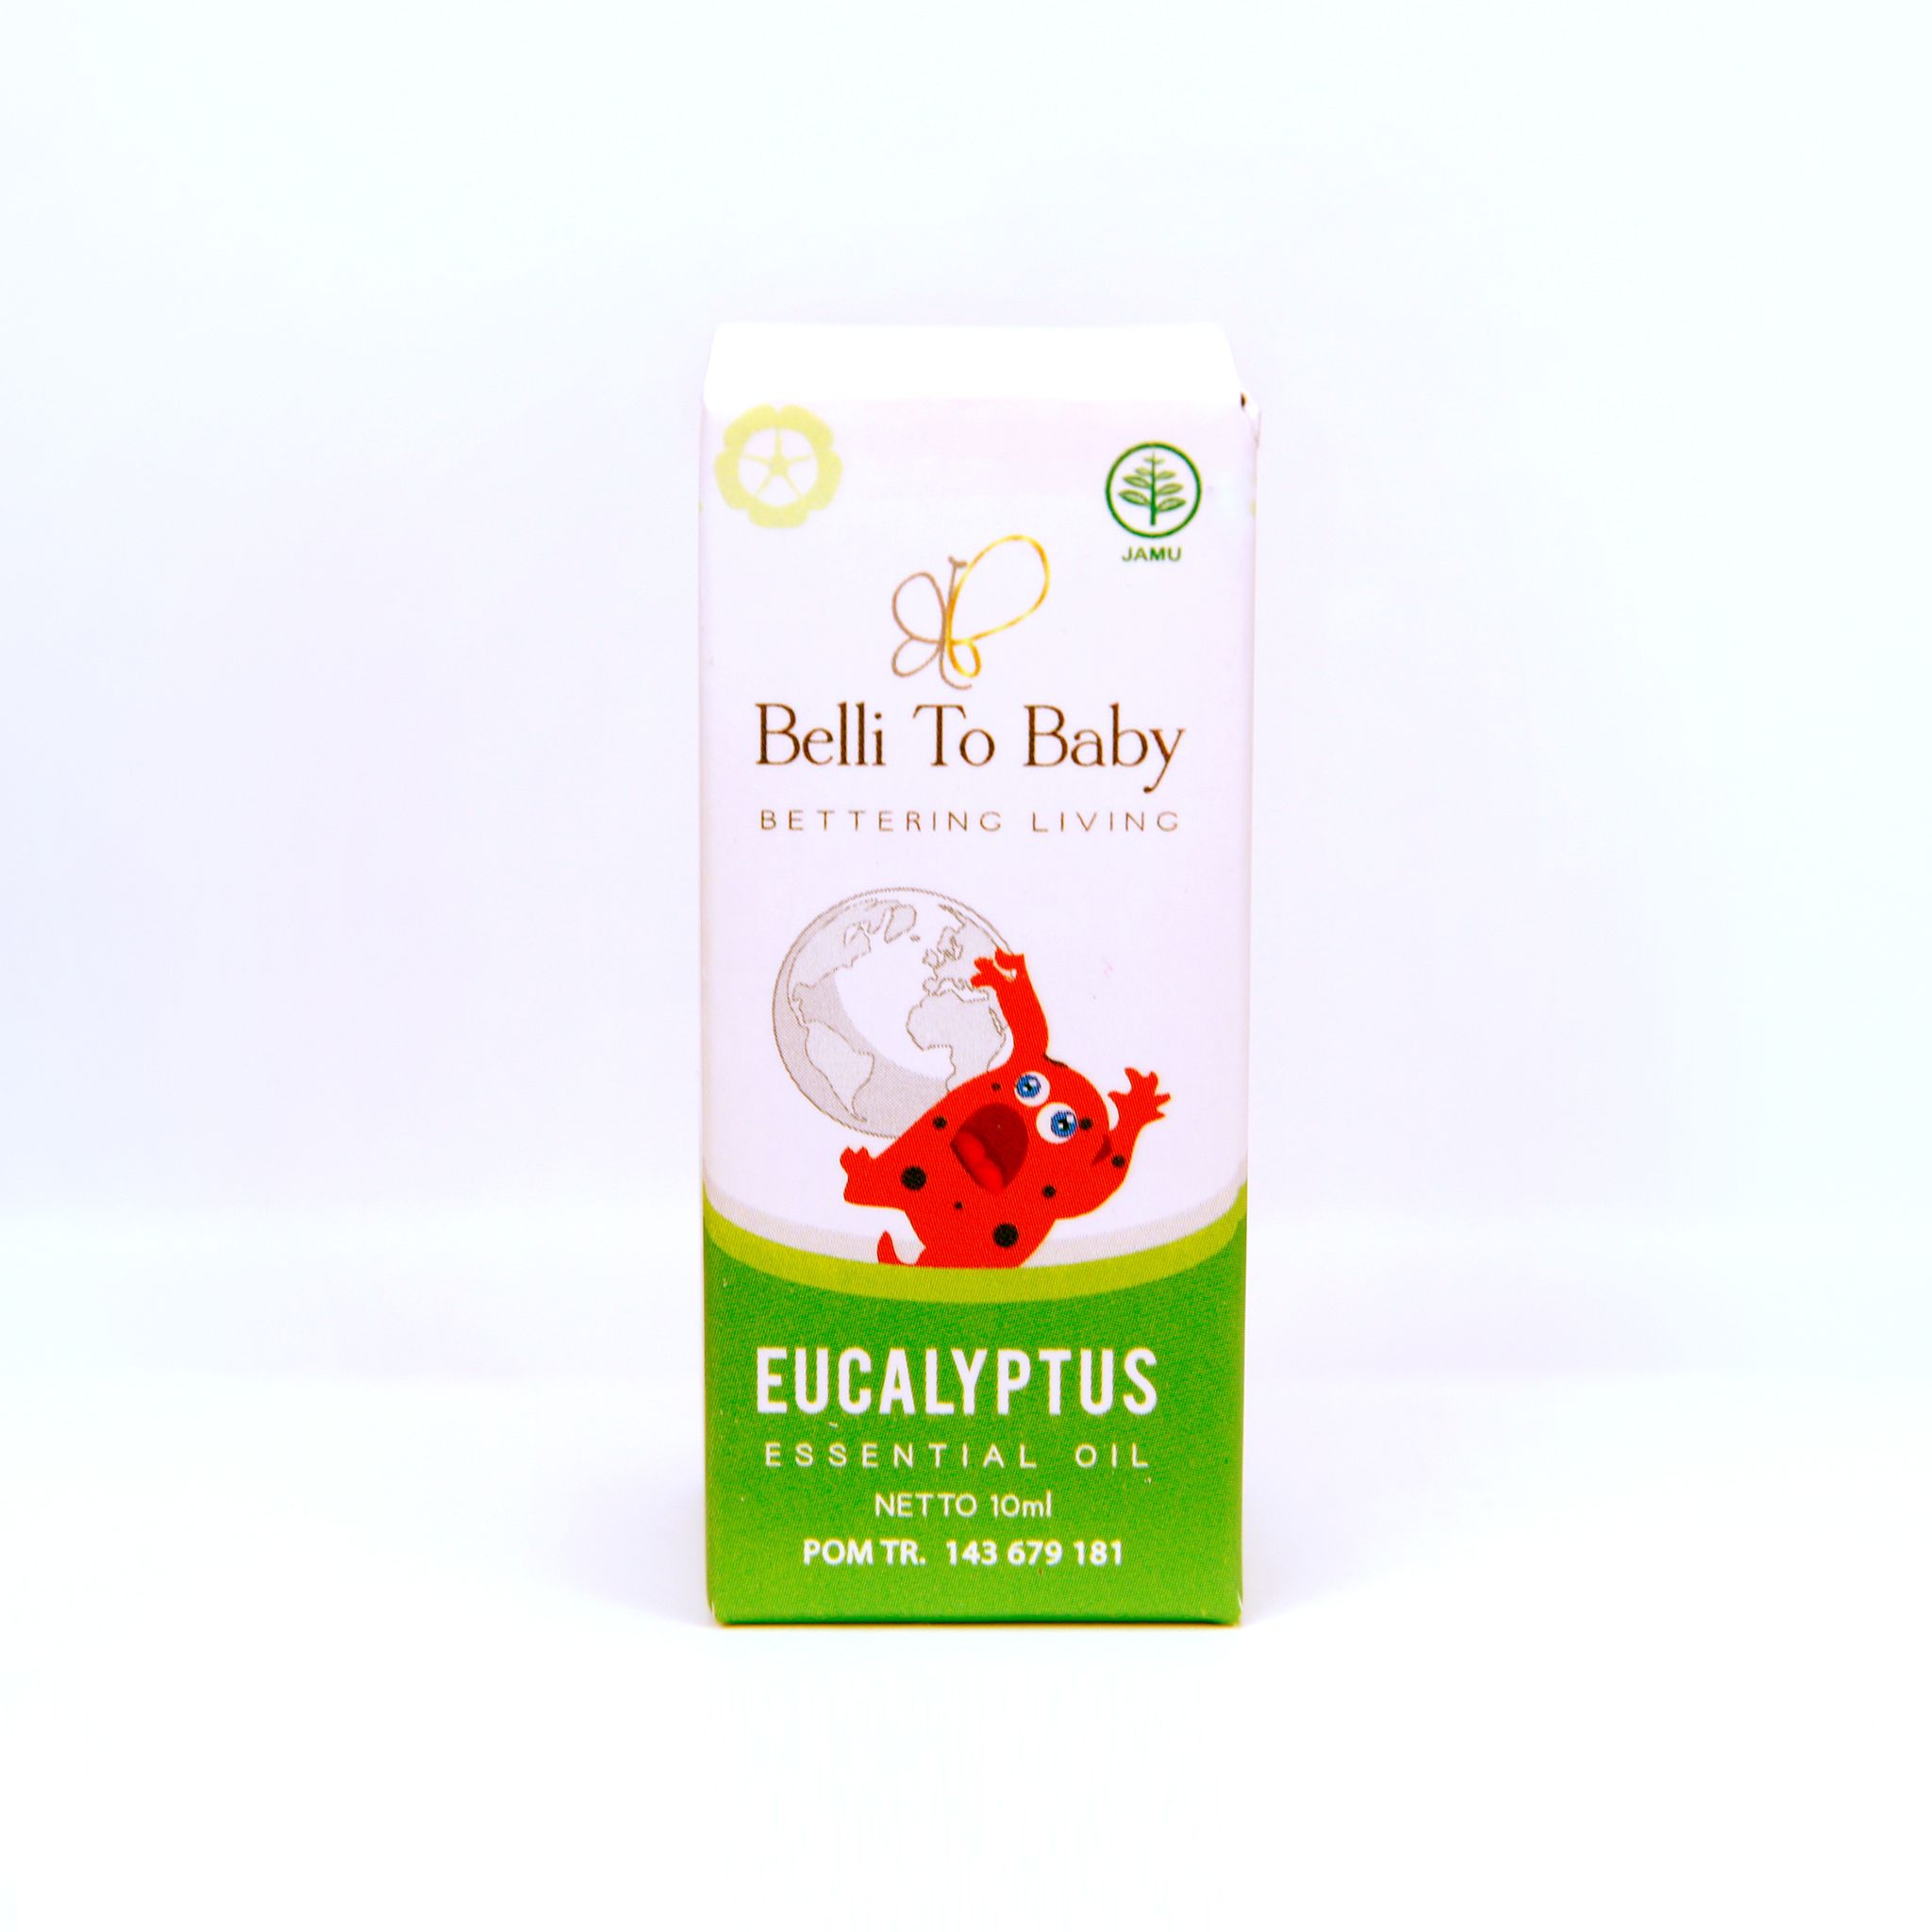 Belli To Baby Essential Oil Eucalyptus 10ml - 4